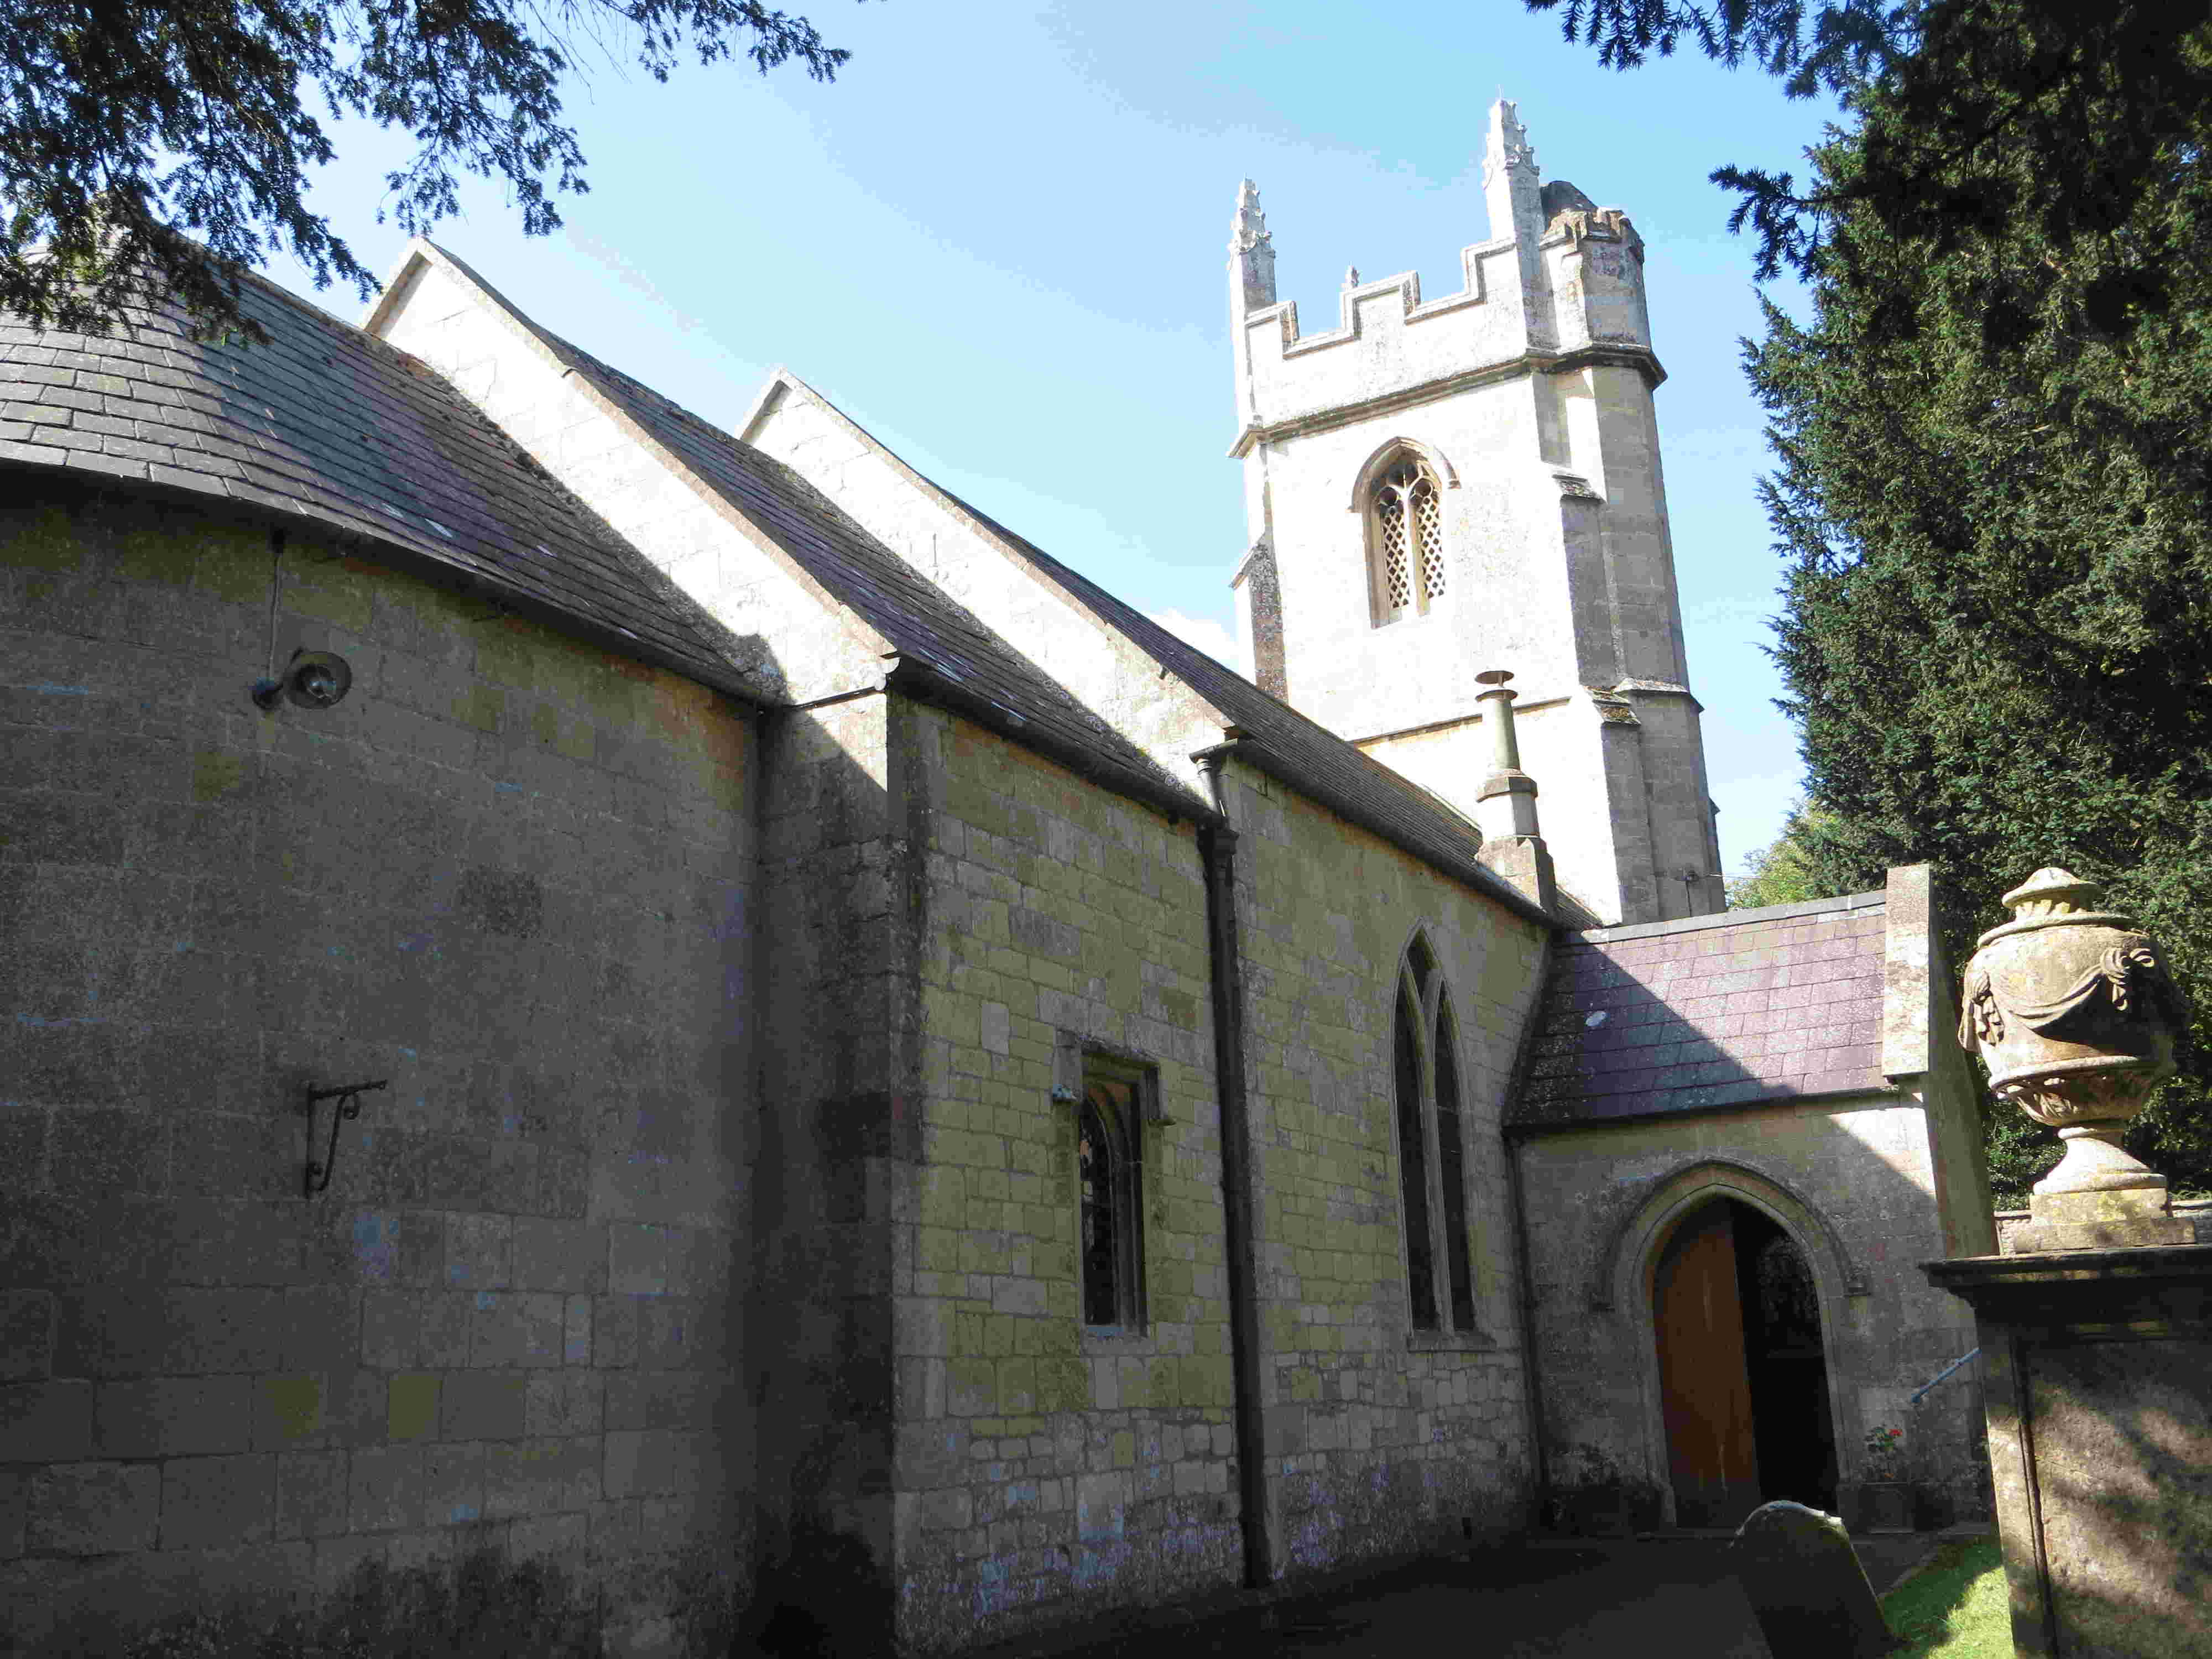 Combe Hay church